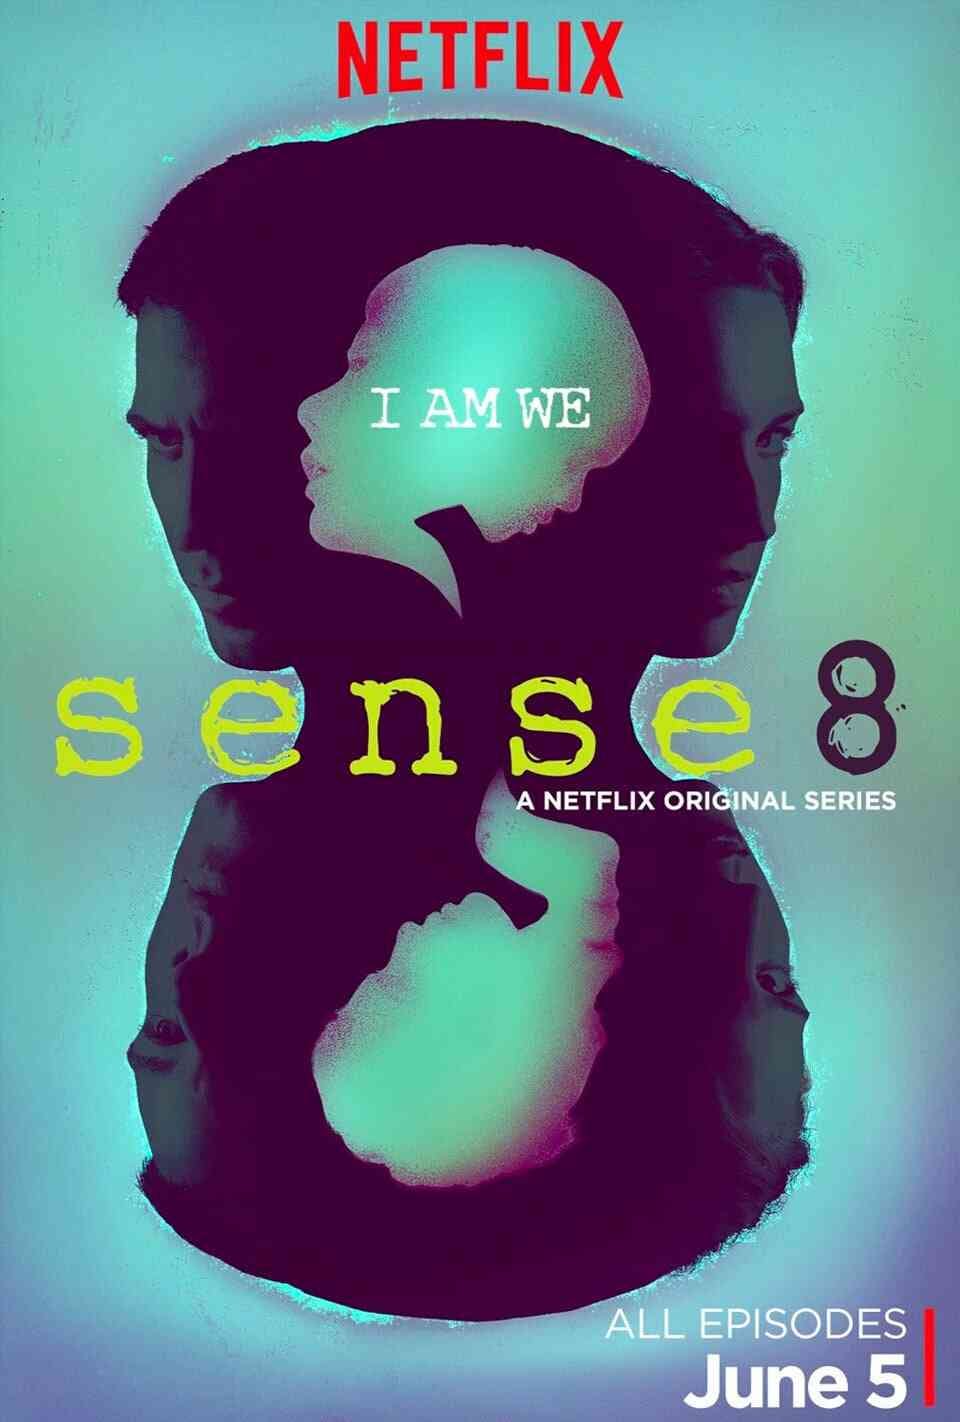 Read Sense8 screenplay.